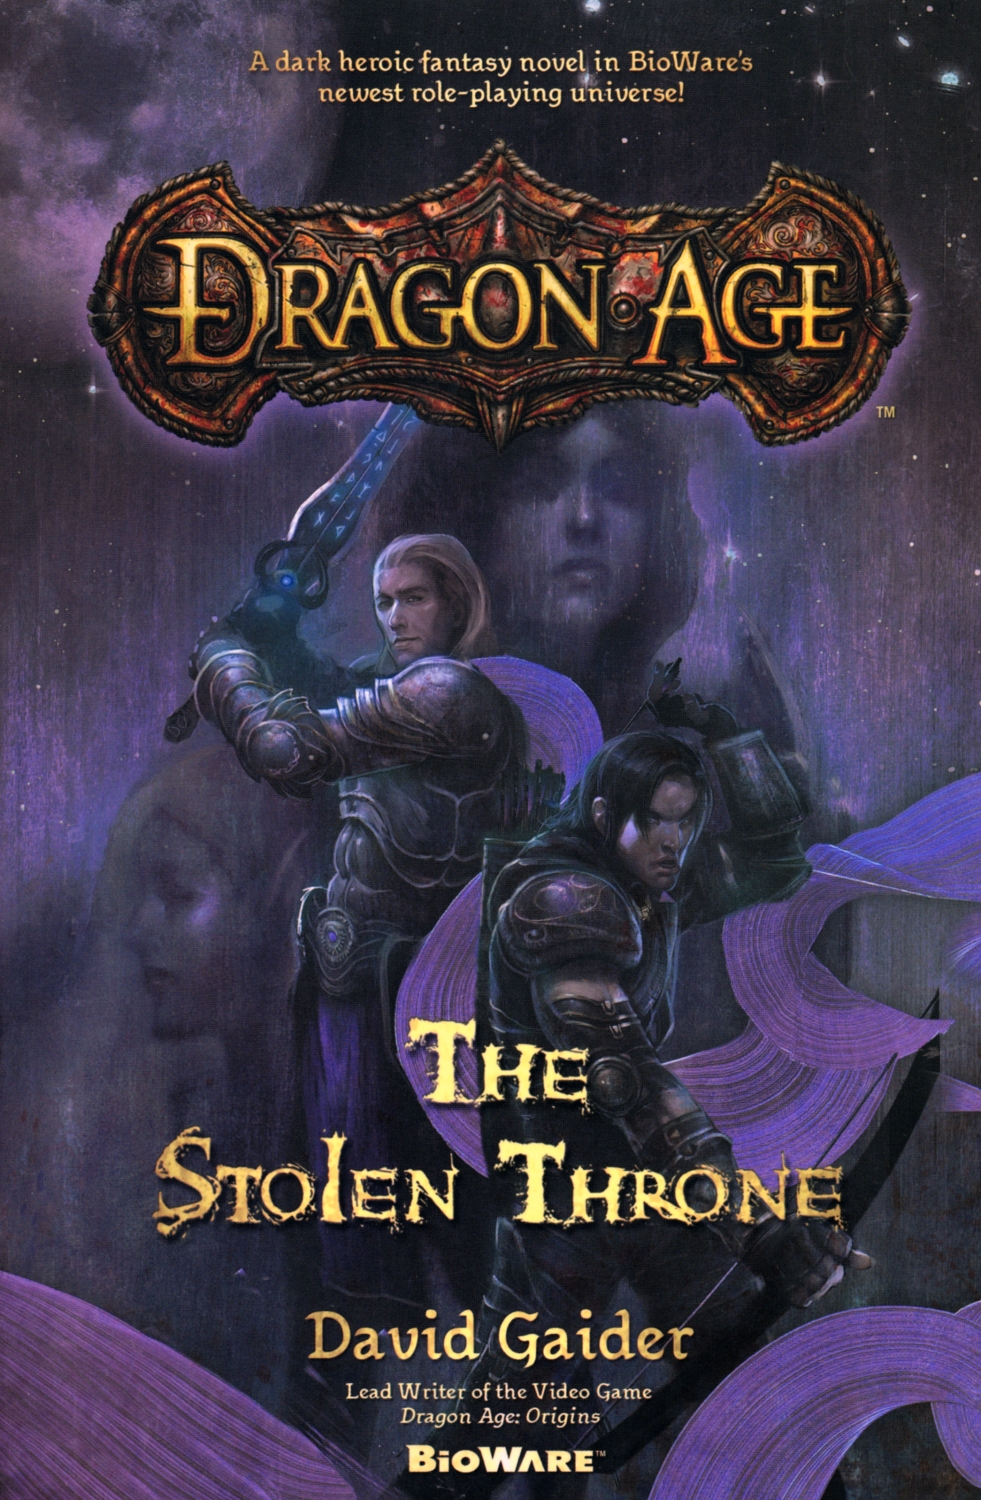 Dragon age the stolen throne epub download free